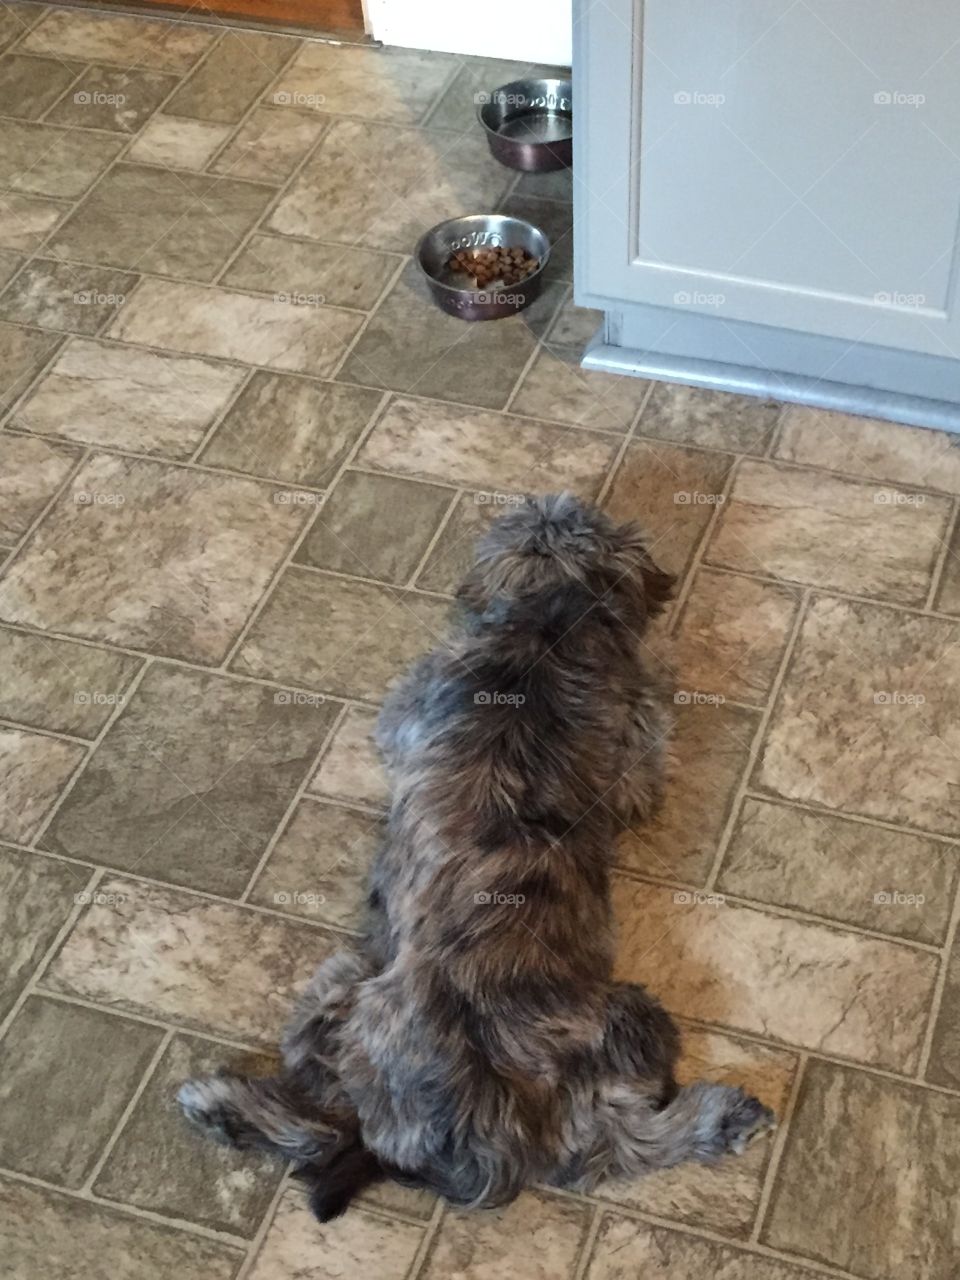 Dog sprawled out by food bowls 